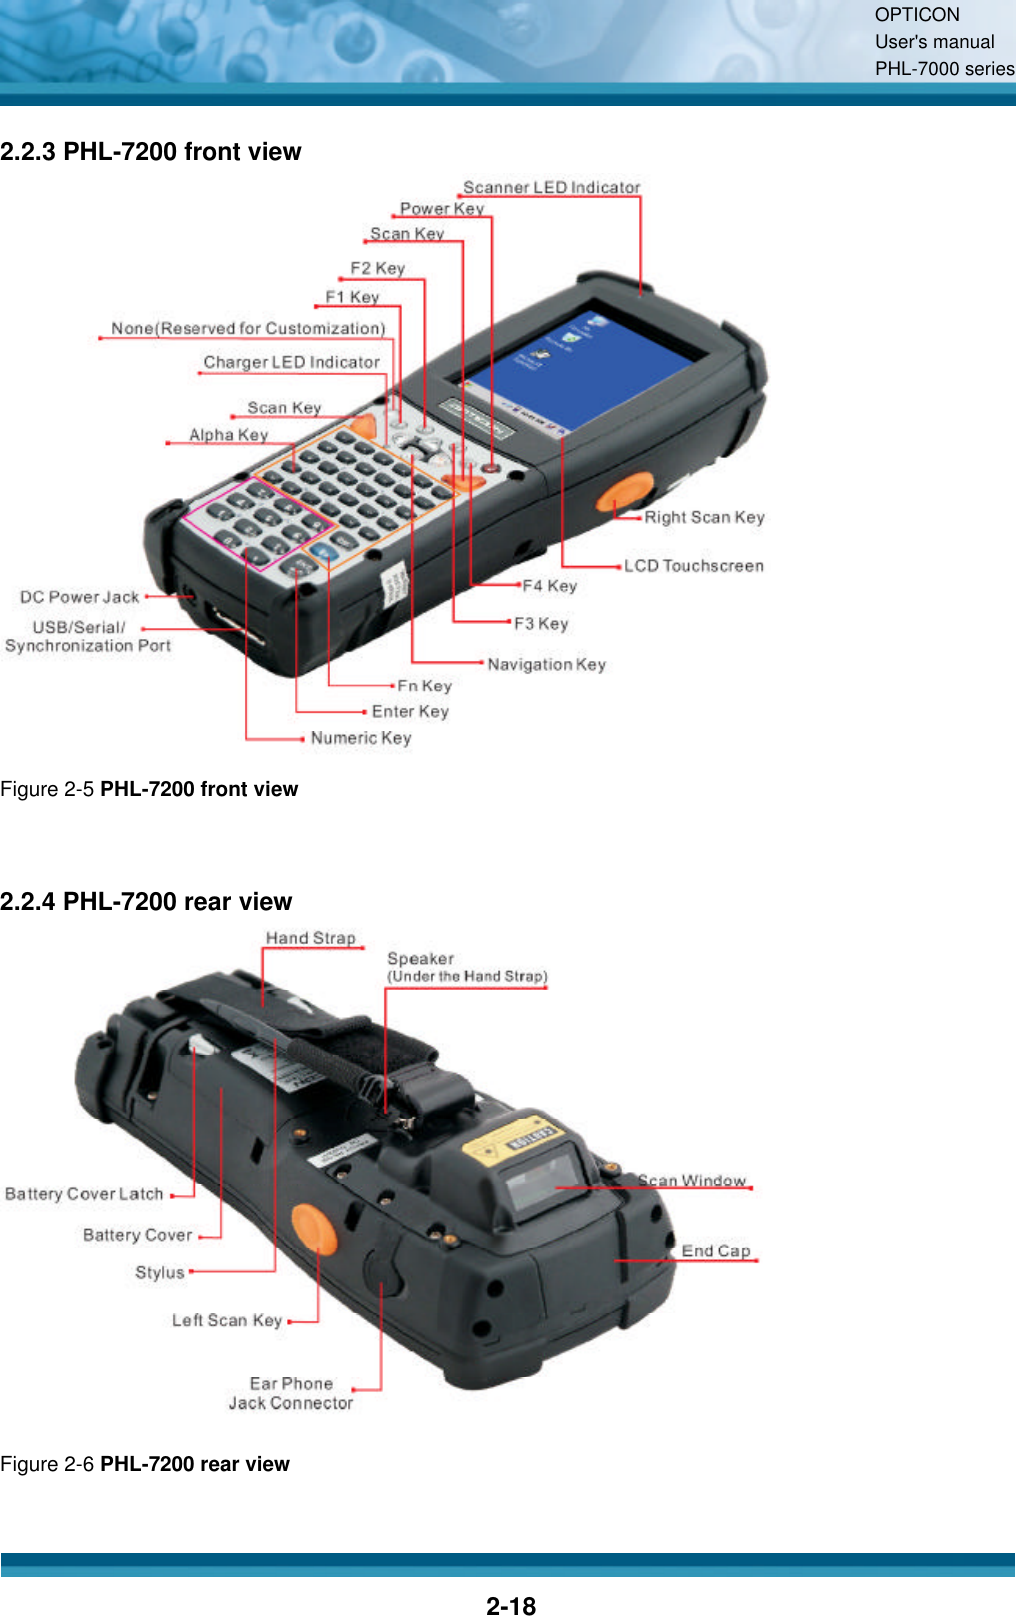 OPTICON User&apos;s manual PHL-7000 series    2-18 2.2.3 PHL-7200 front view  Figure 2-5 PHL-7200 front view   2.2.4 PHL-7200 rear view  Figure 2-6 PHL-7200 rear view 